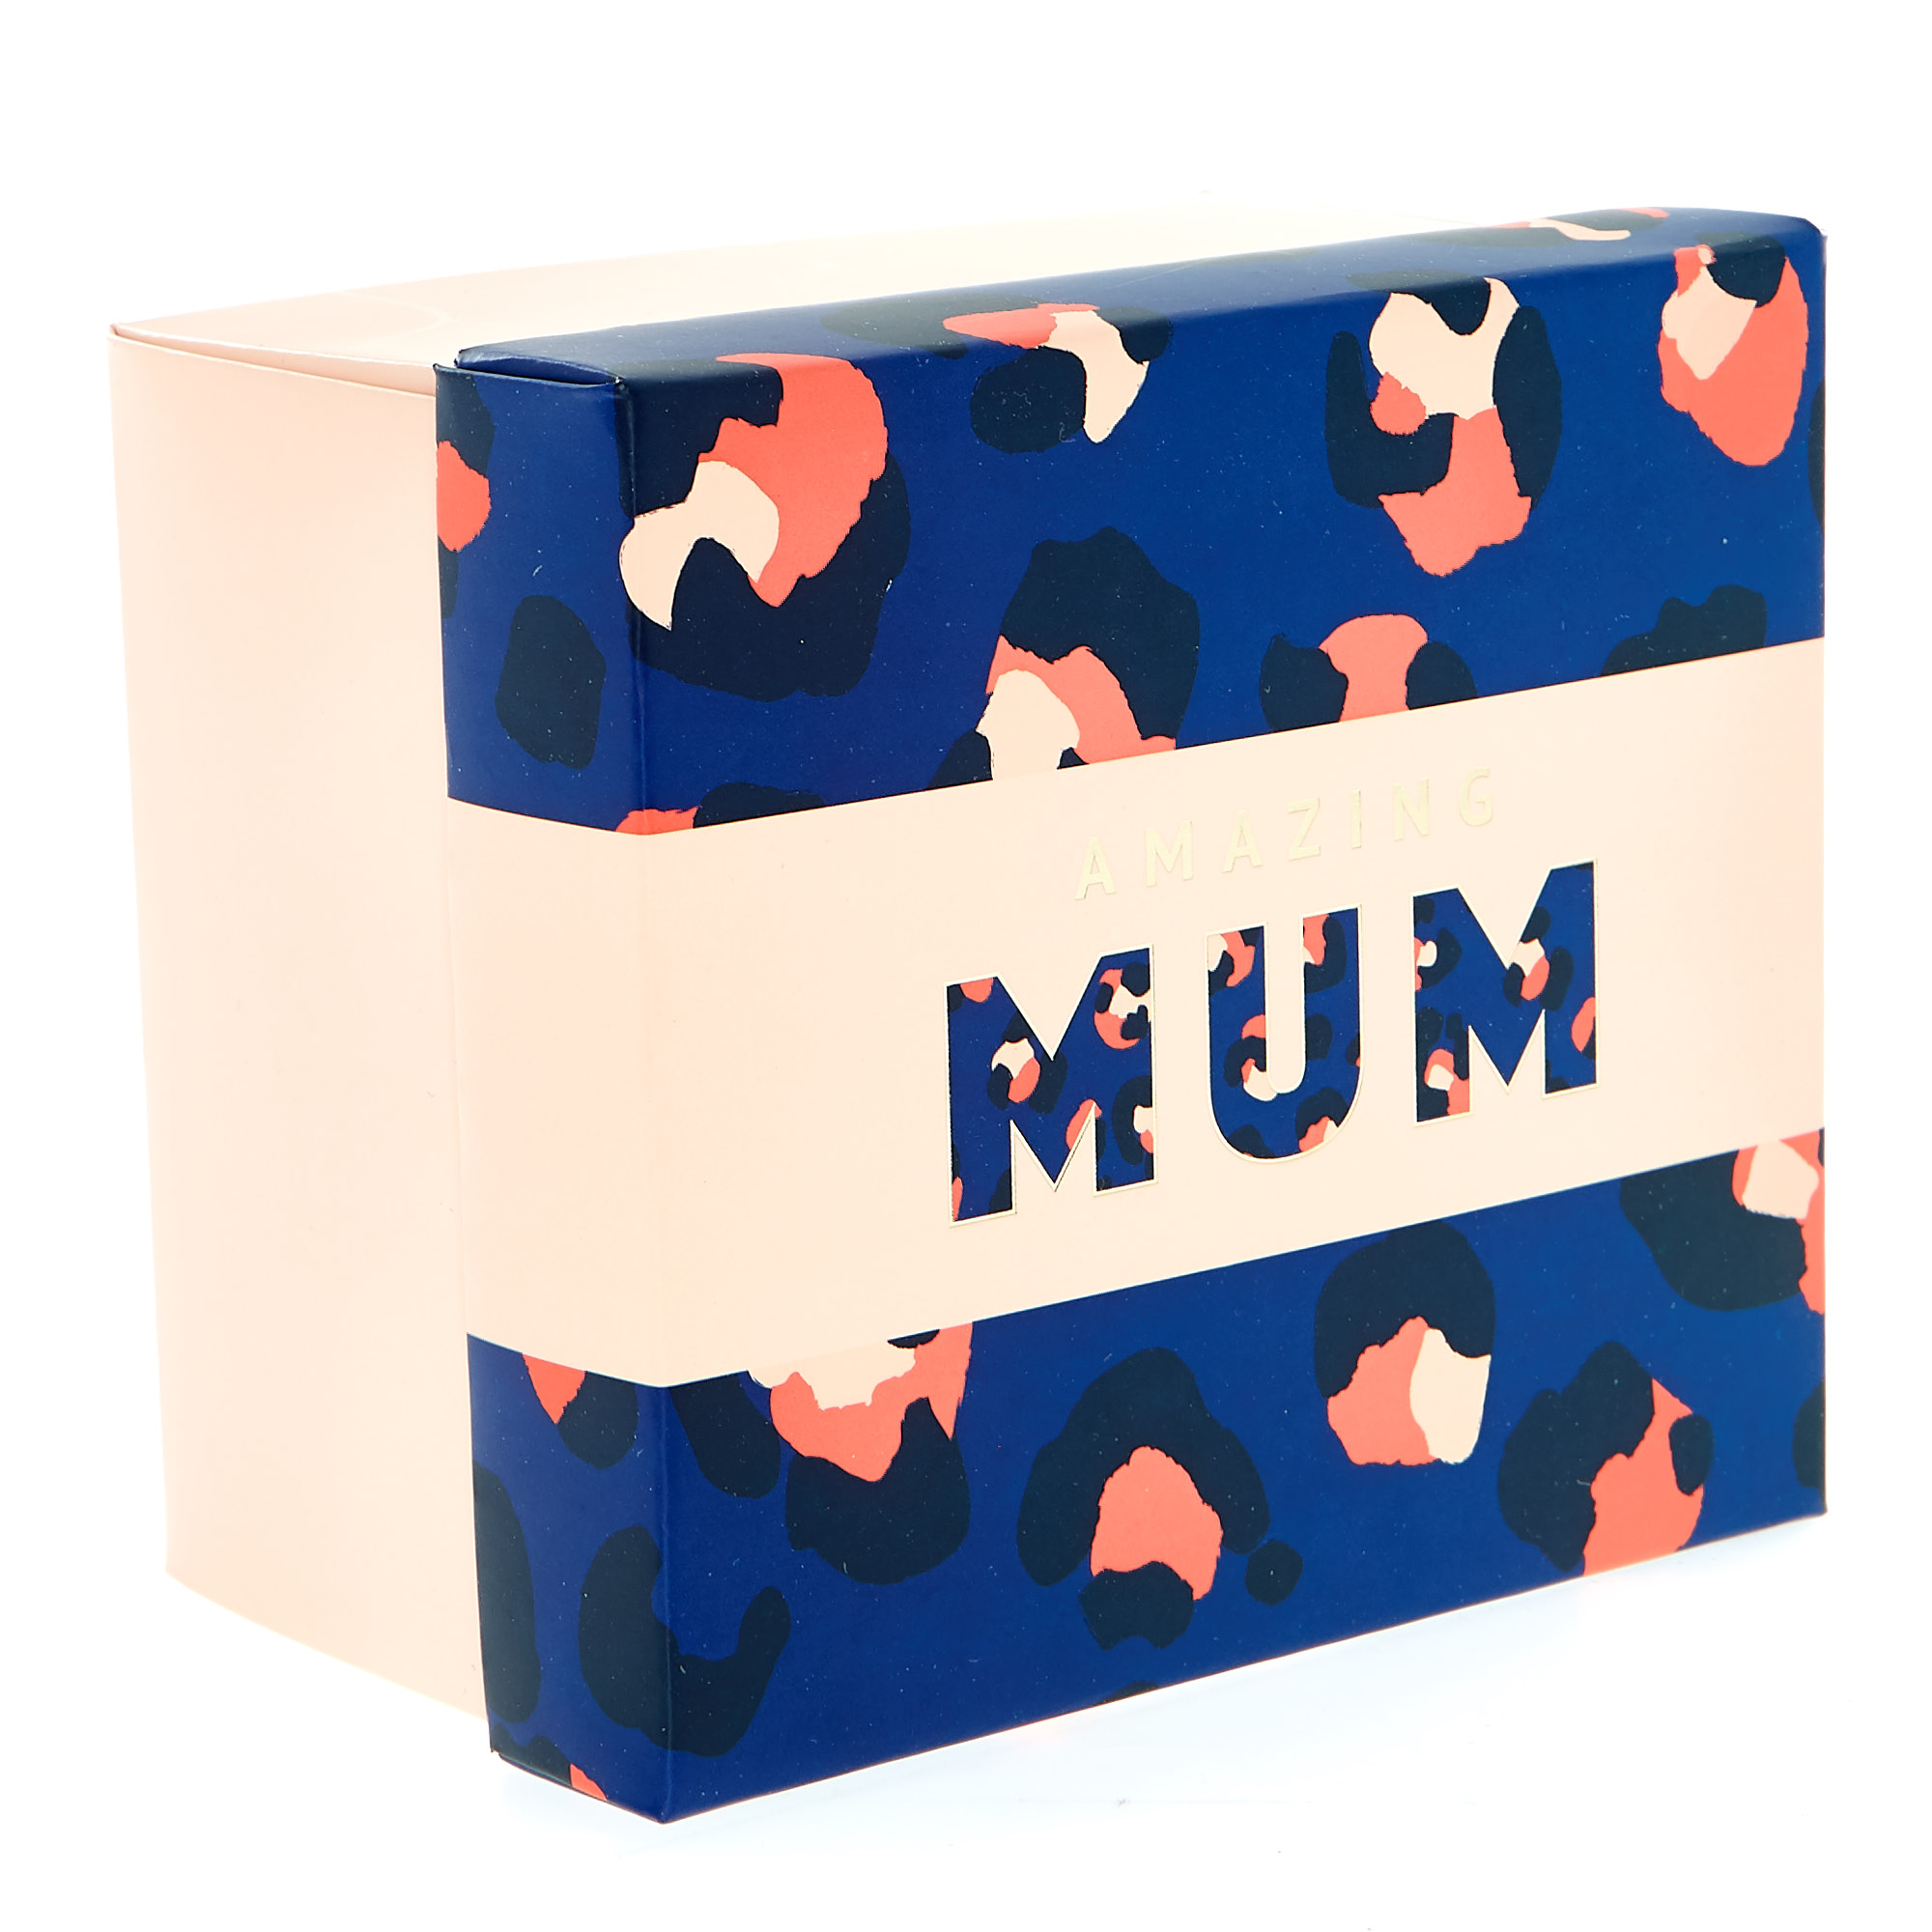 Wild Mum Mug In A Box